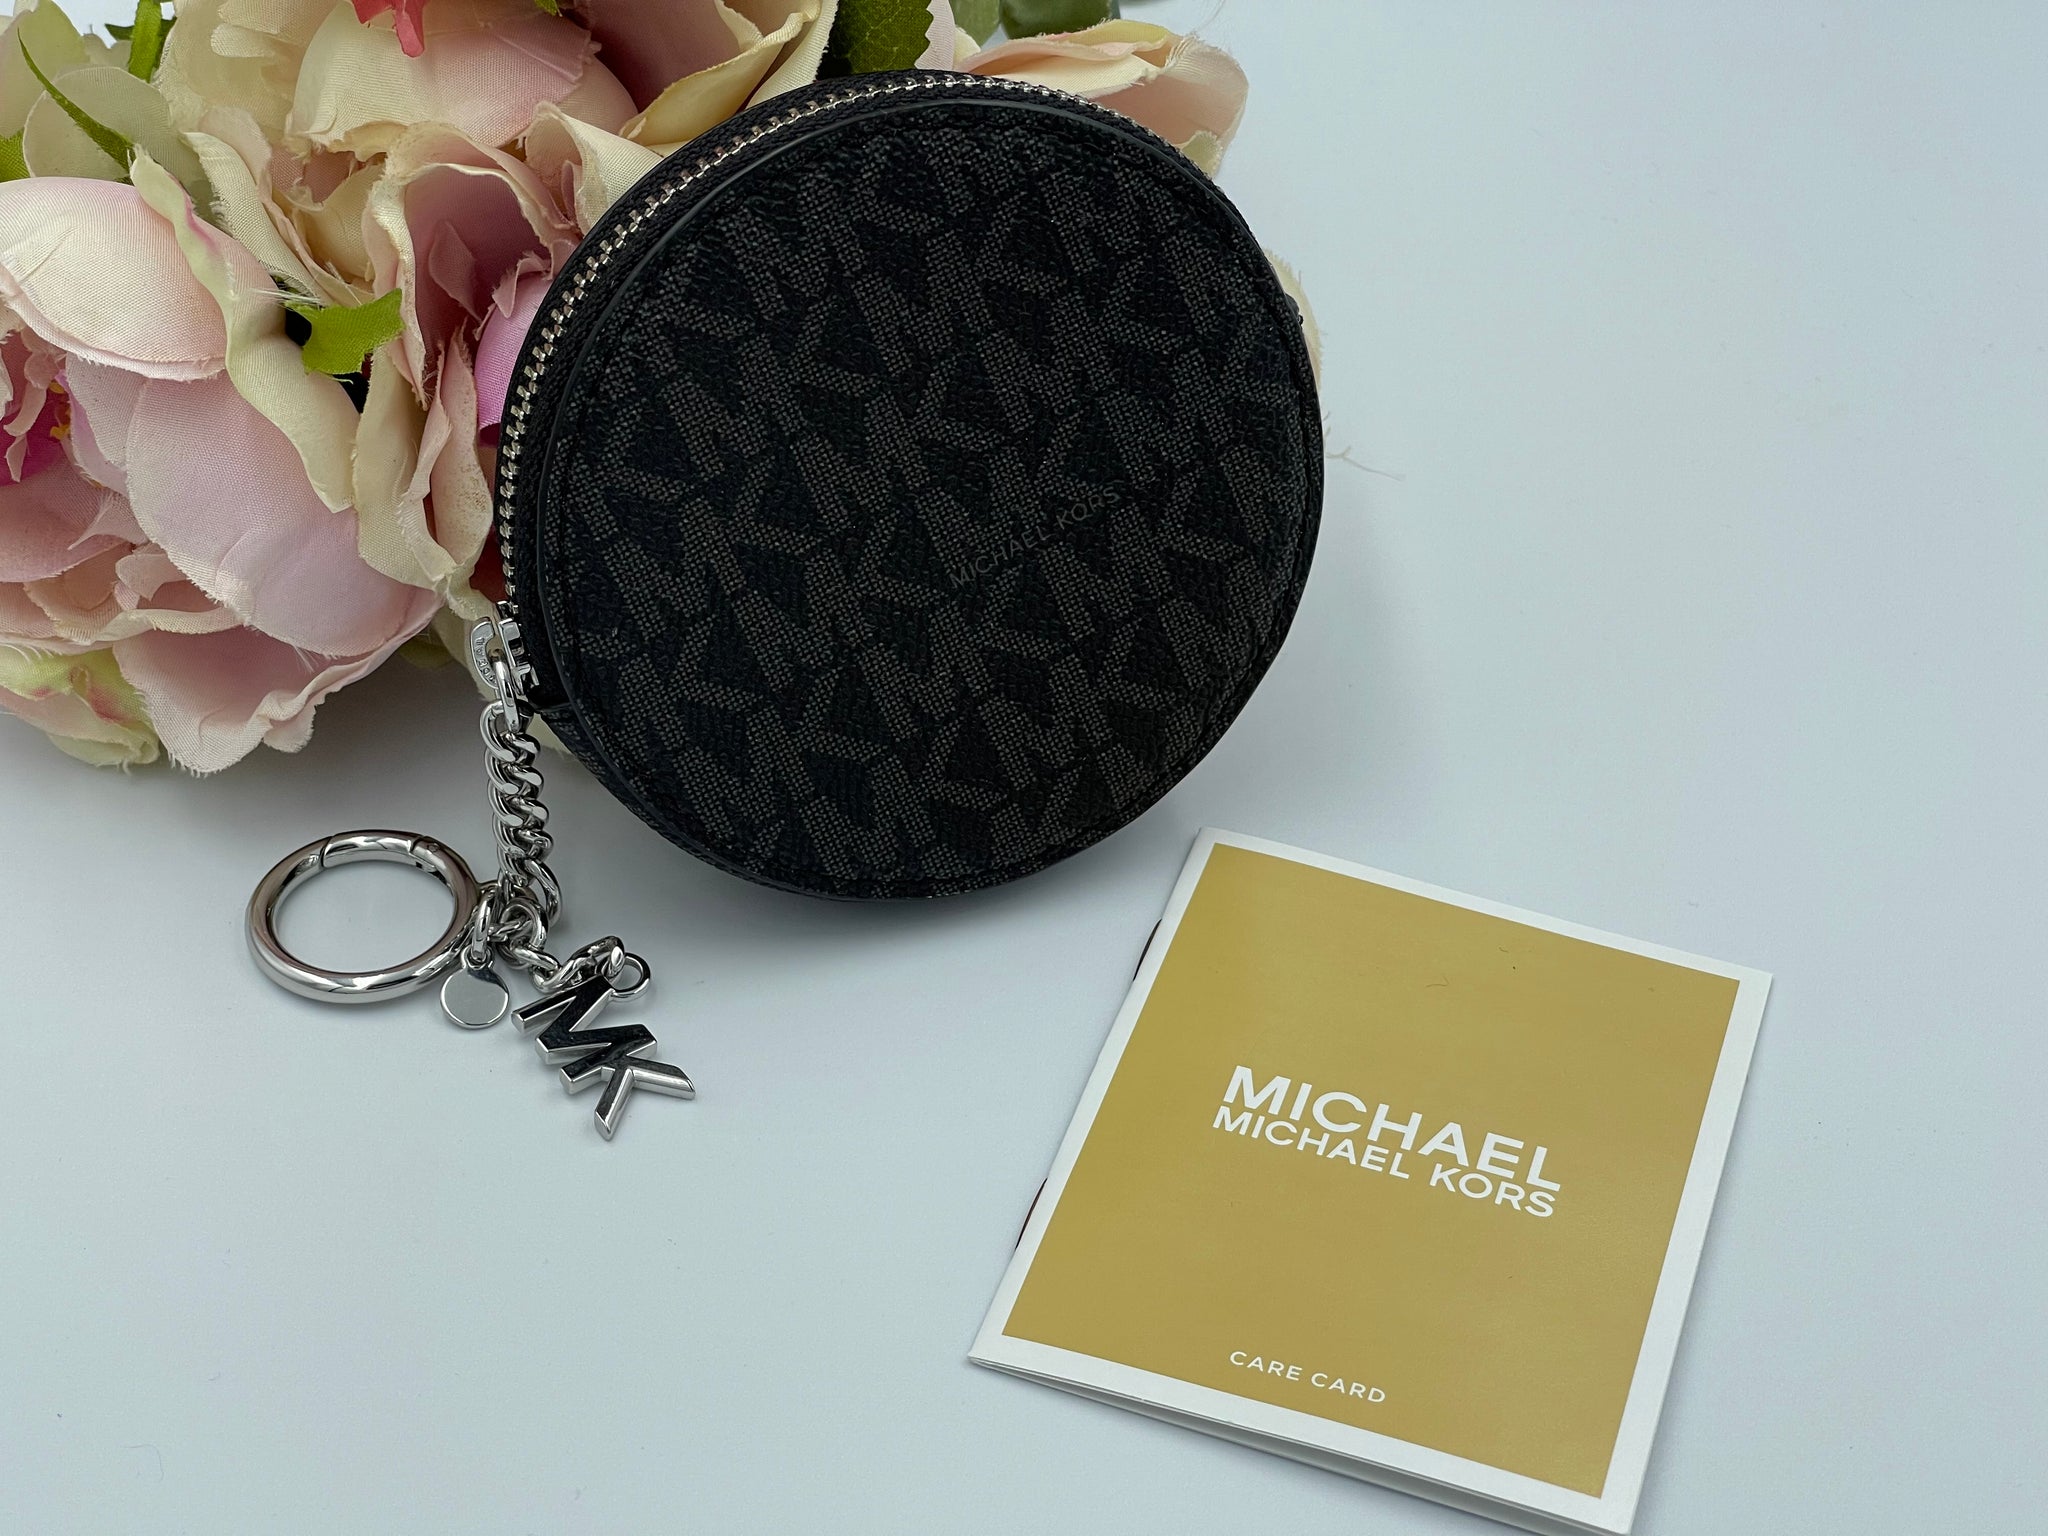 Michael Kors Men's Logo Wallet and Keychain Gift Set